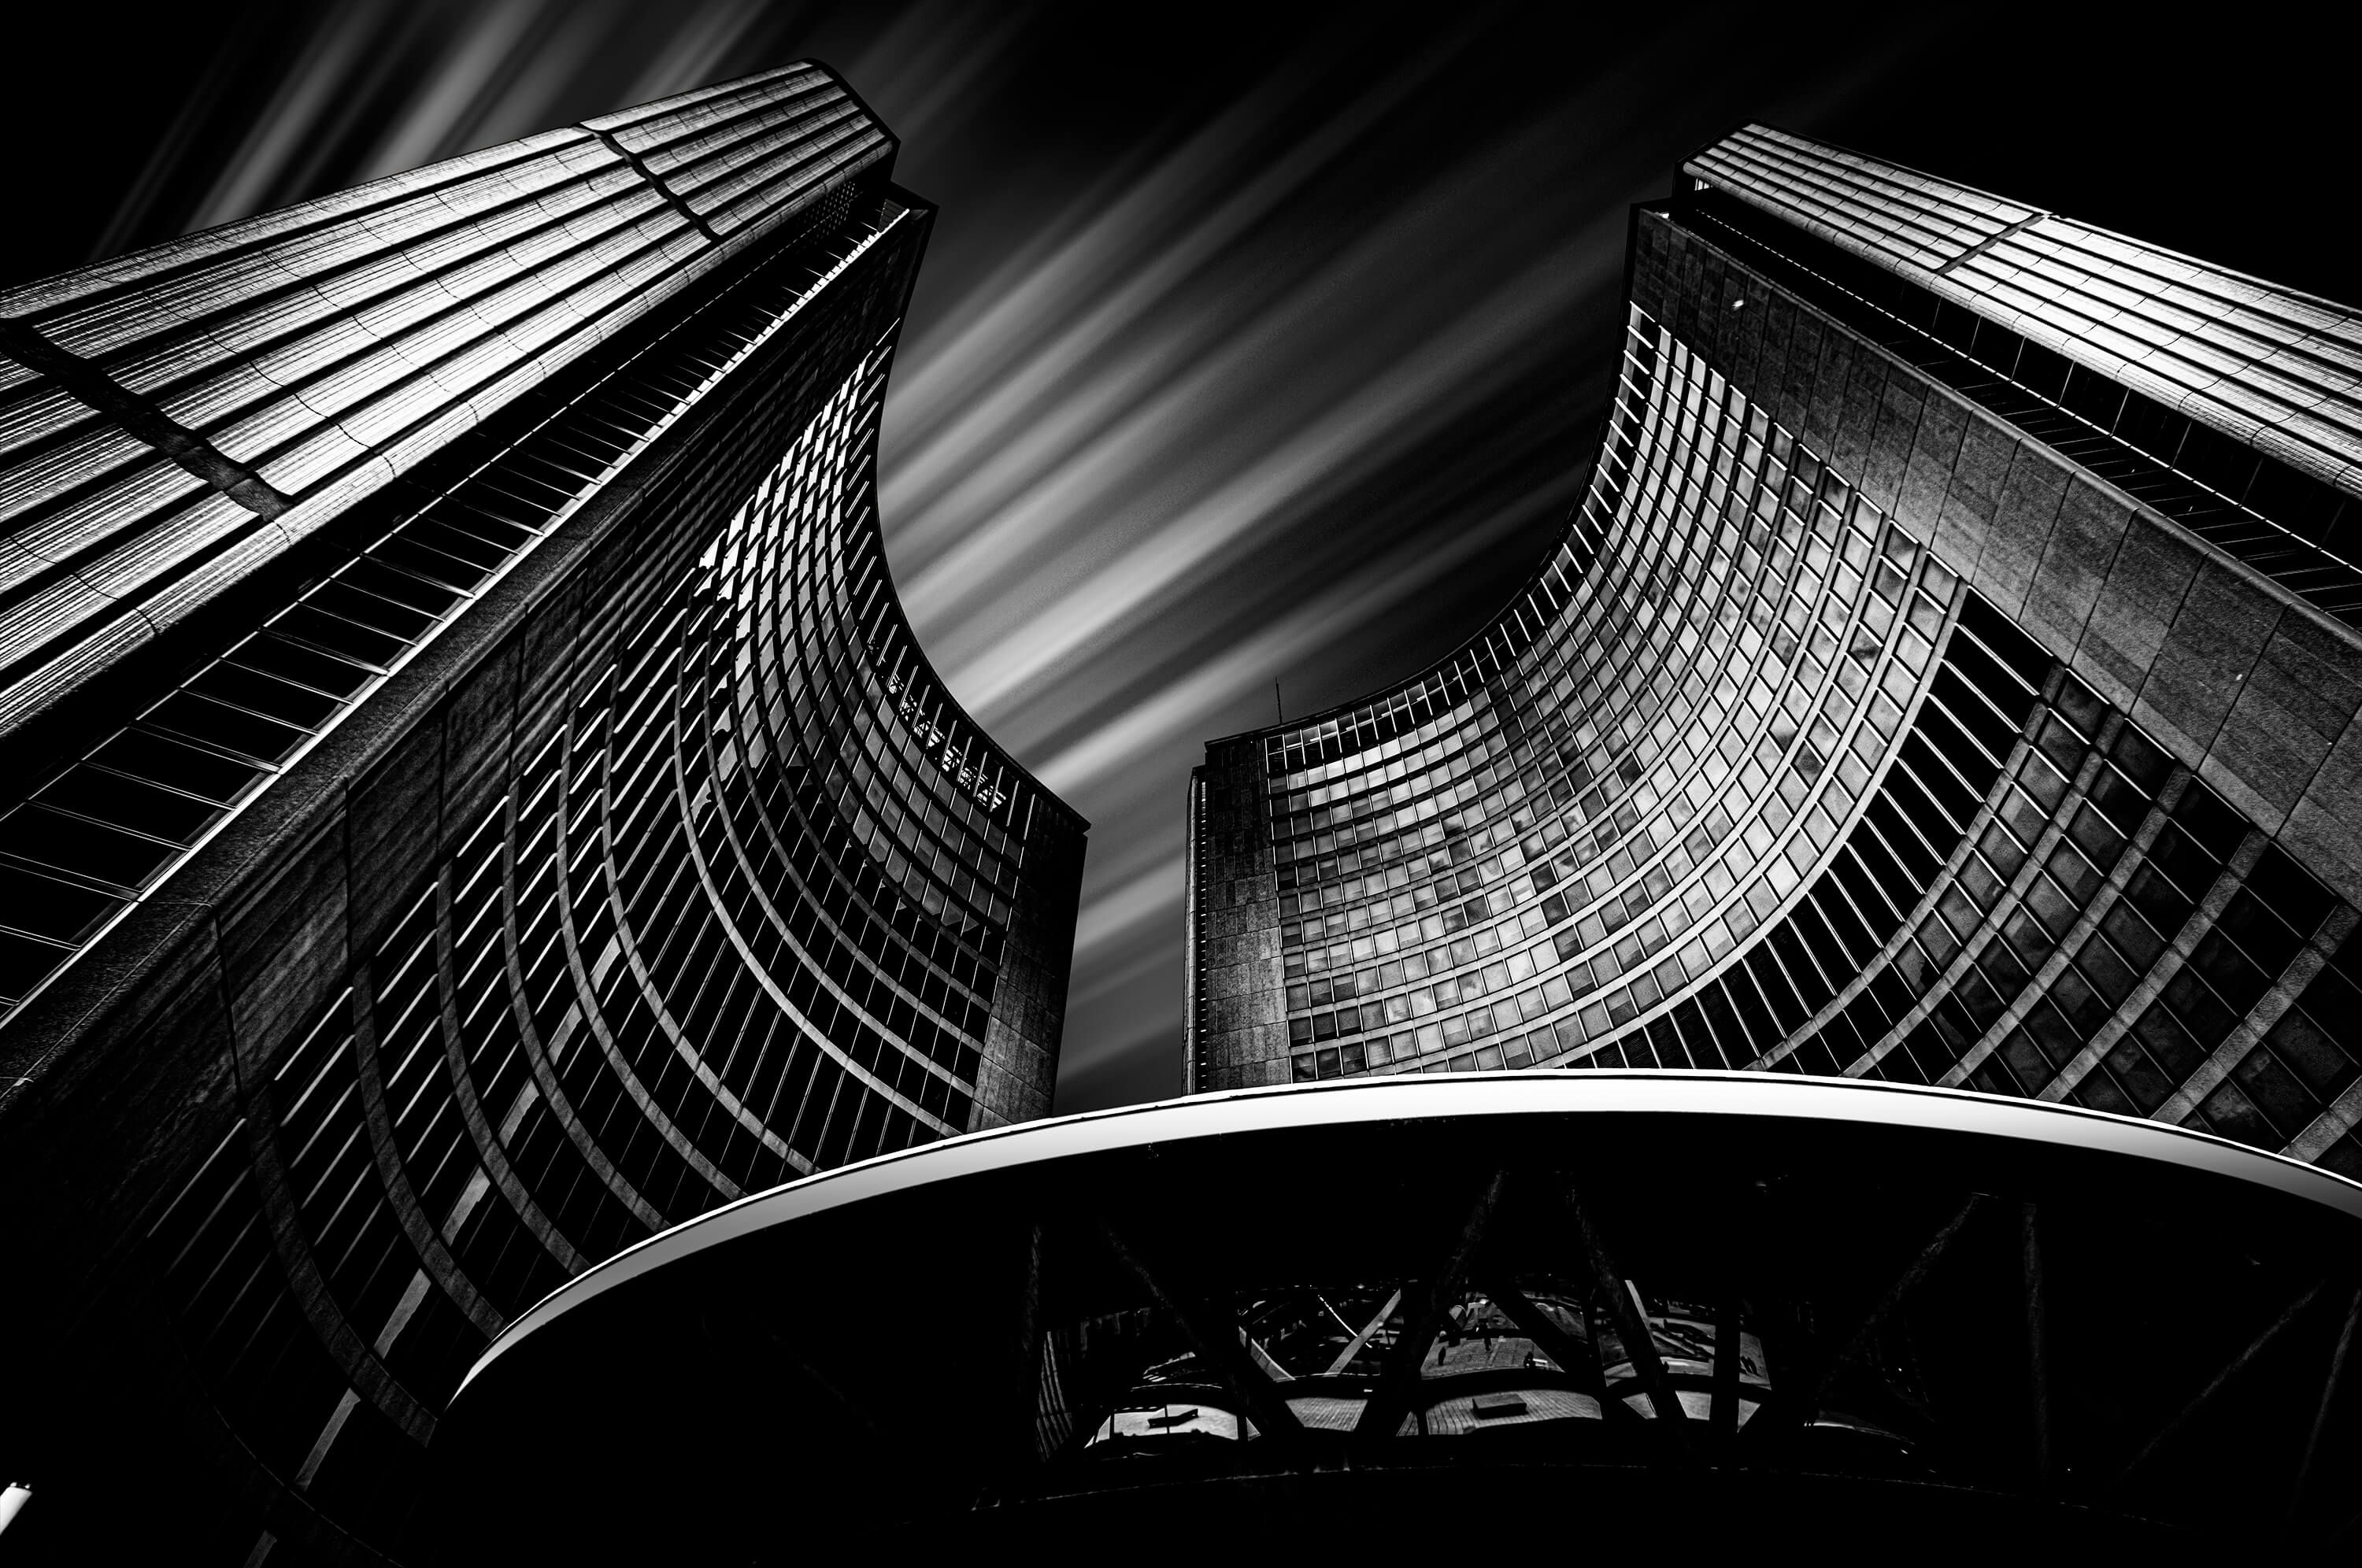  The City Hall - Toronto